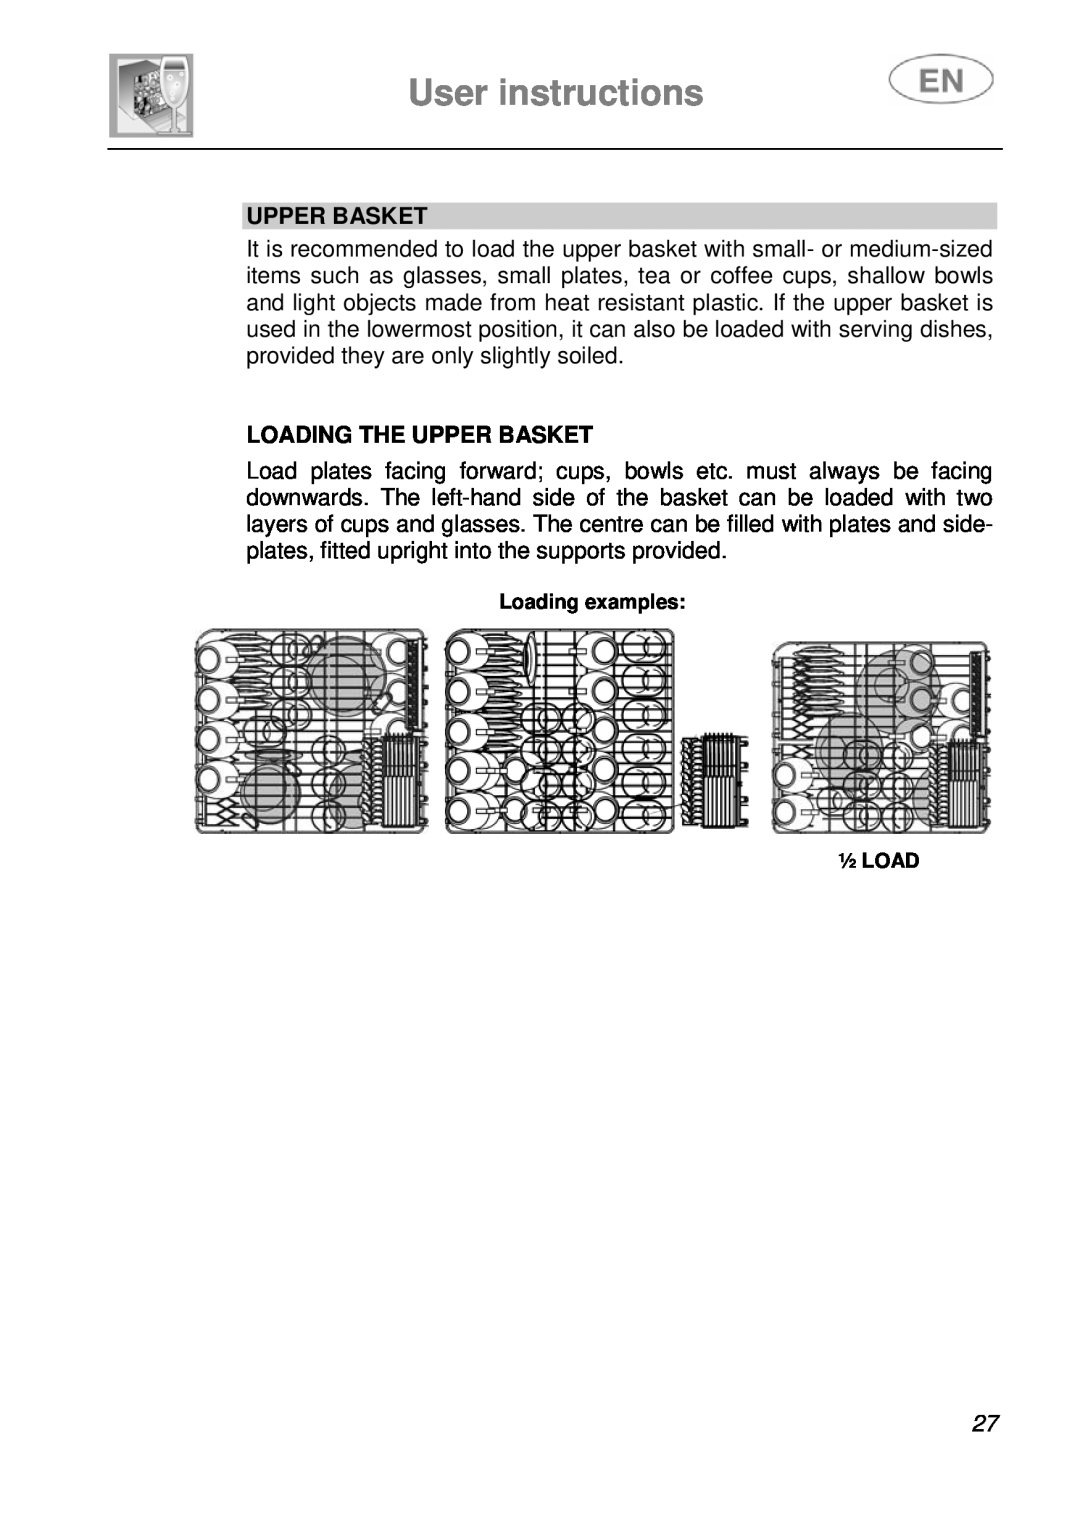 Smeg LS19-7 instruction manual User instructions, Loading The Upper Basket 